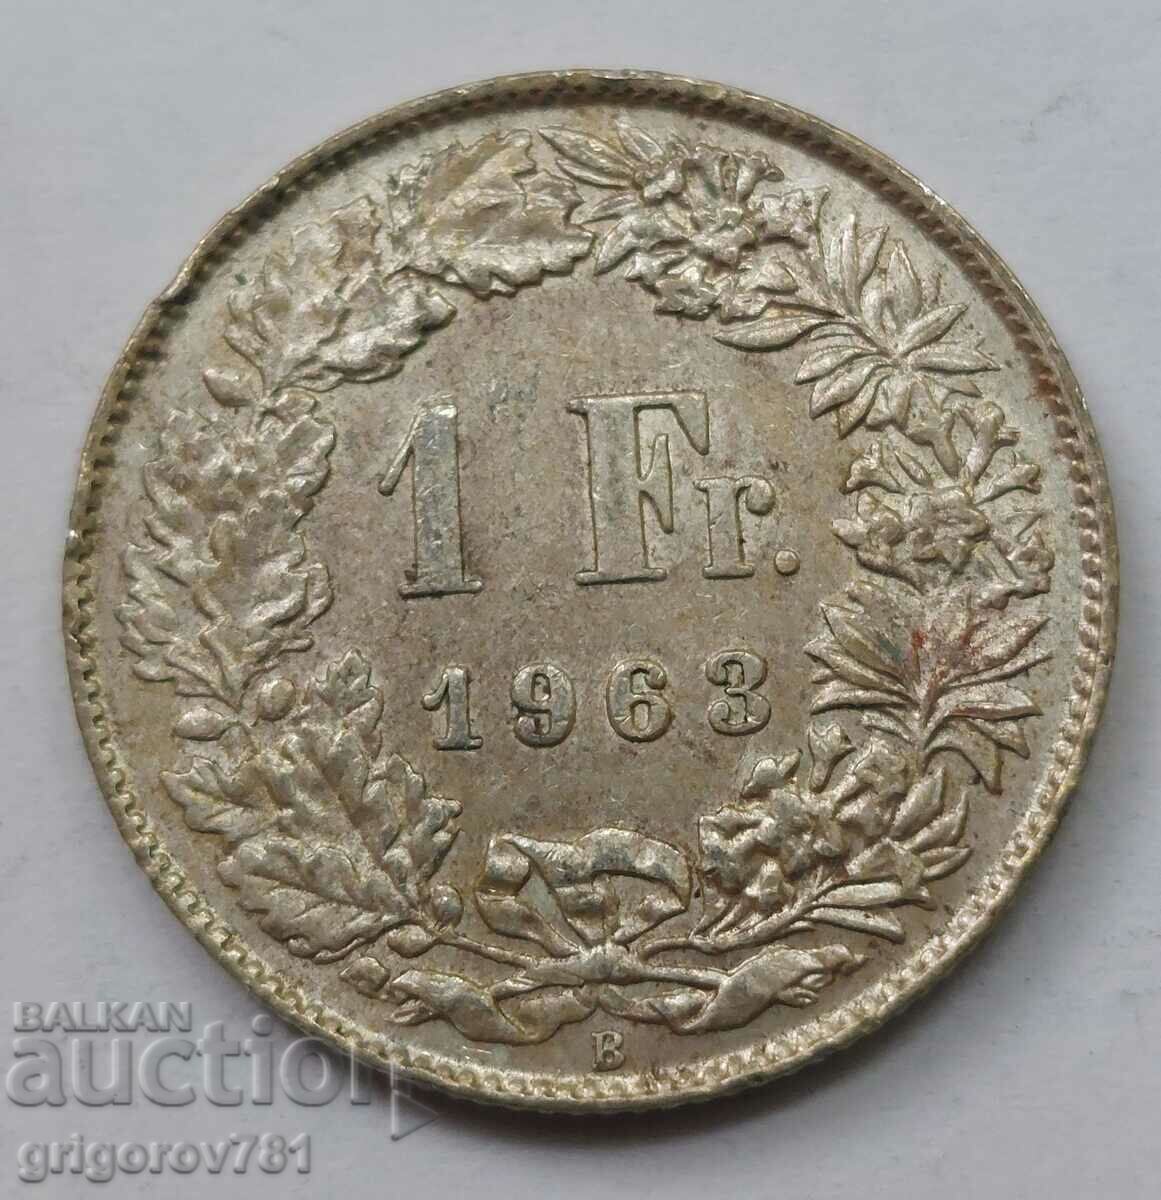 1 Franc Argint Elveția 1963 B - Monedă de argint #34